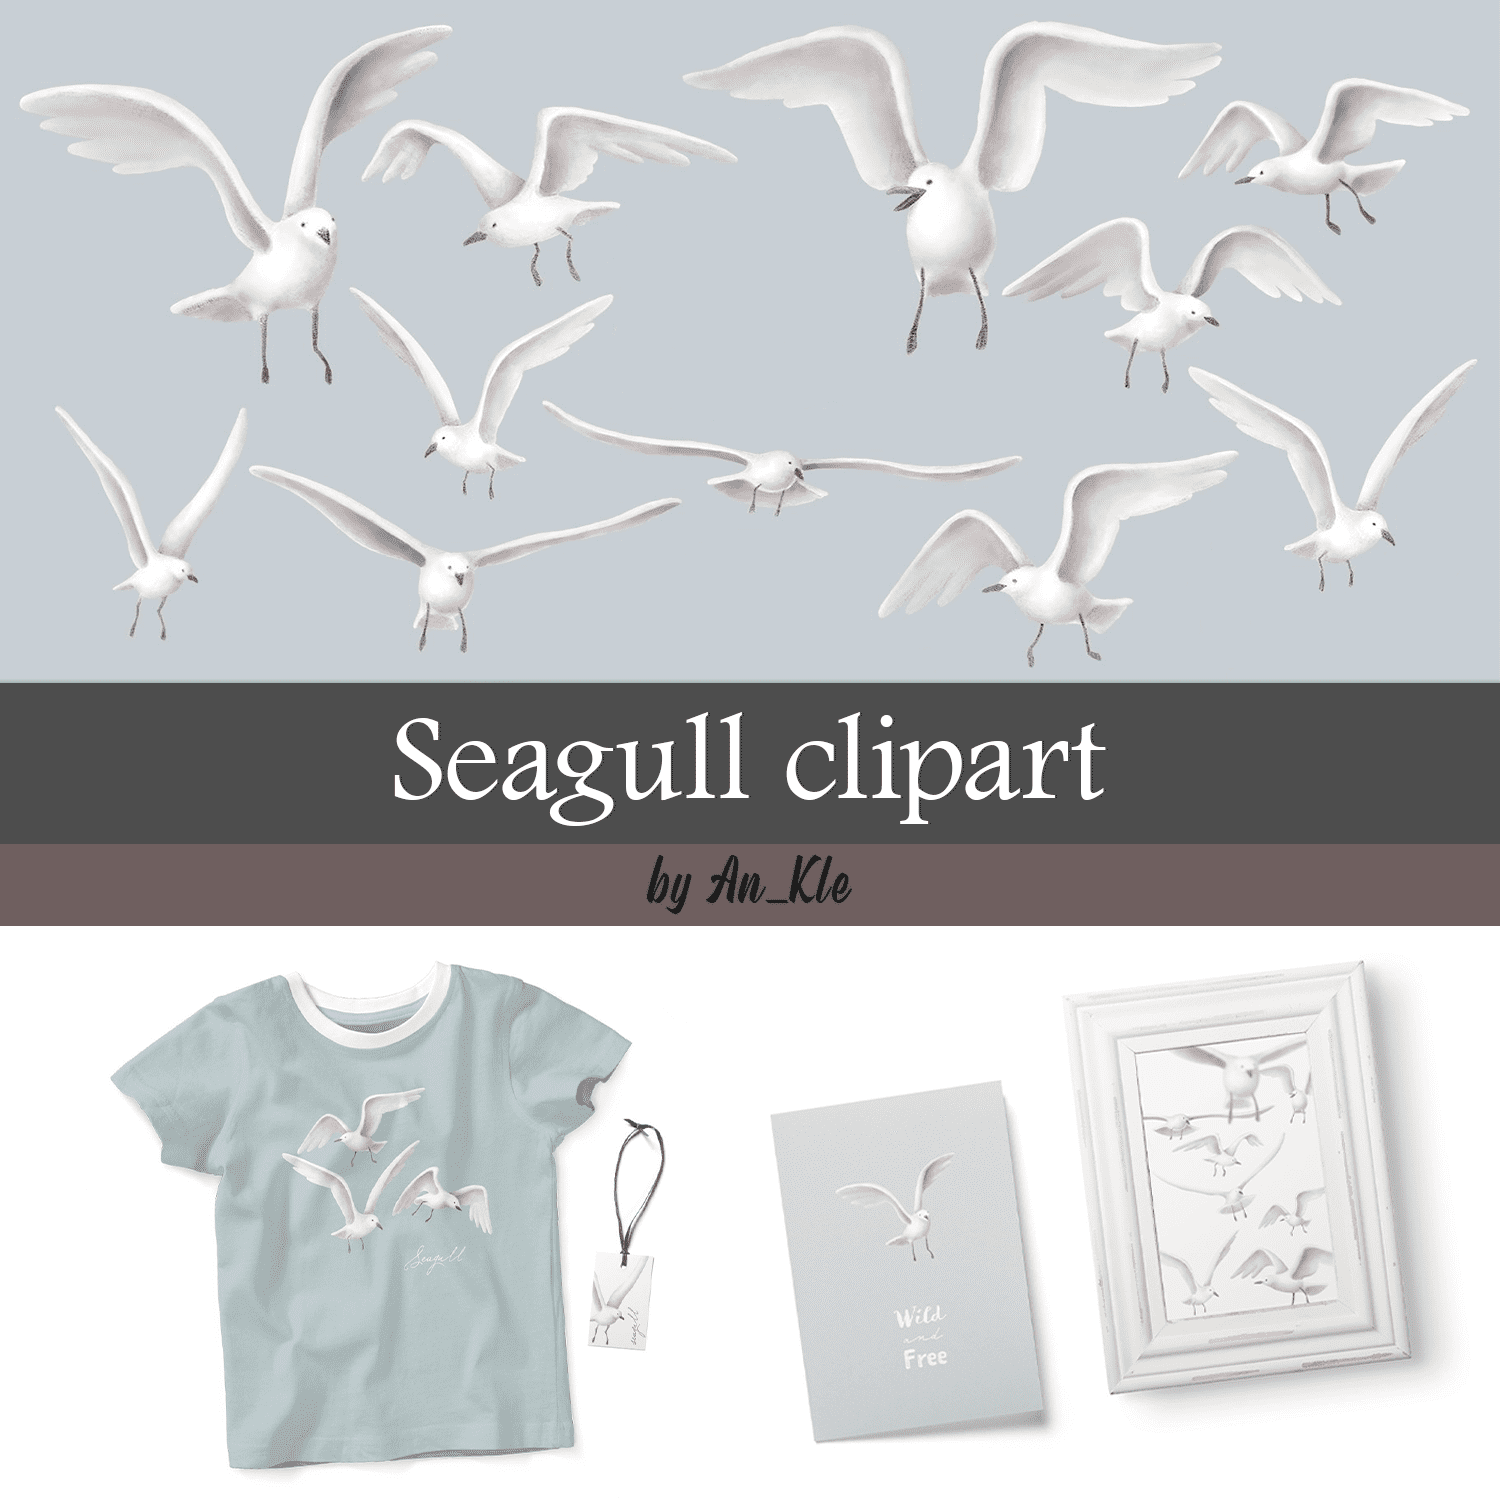 Seagull clipart.